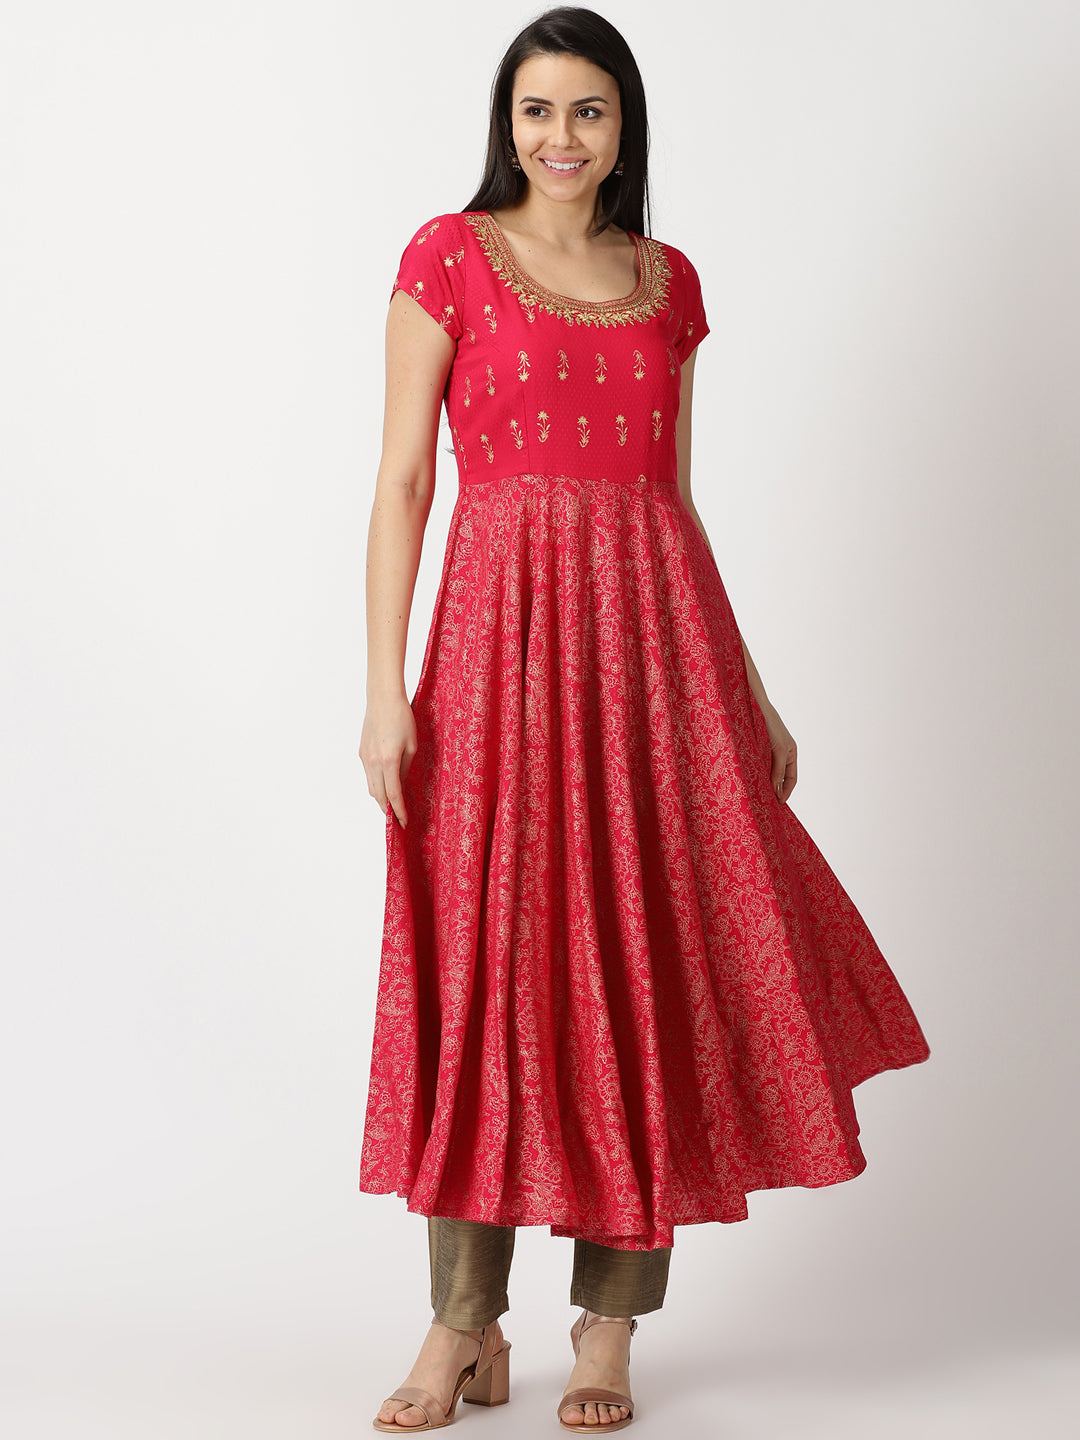 Biba Girls Biba Girl's Red Cotton Anarkali Kurta Churidar Suit Set :  Amazon.in: Fashion